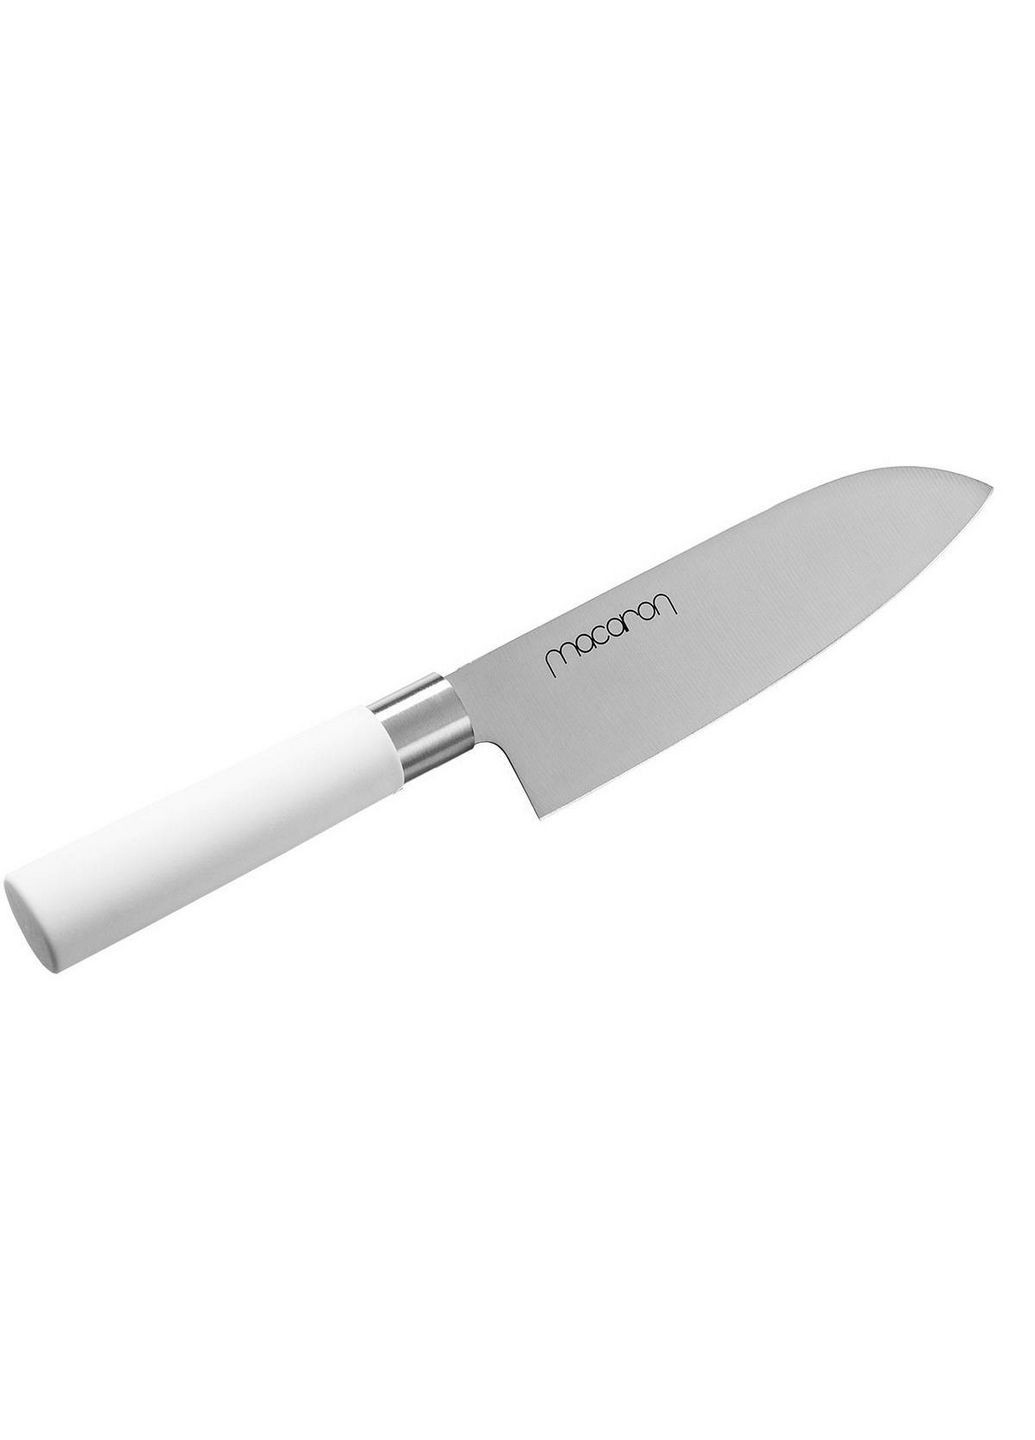 Кухонный японский нож 17 см Satake белые,